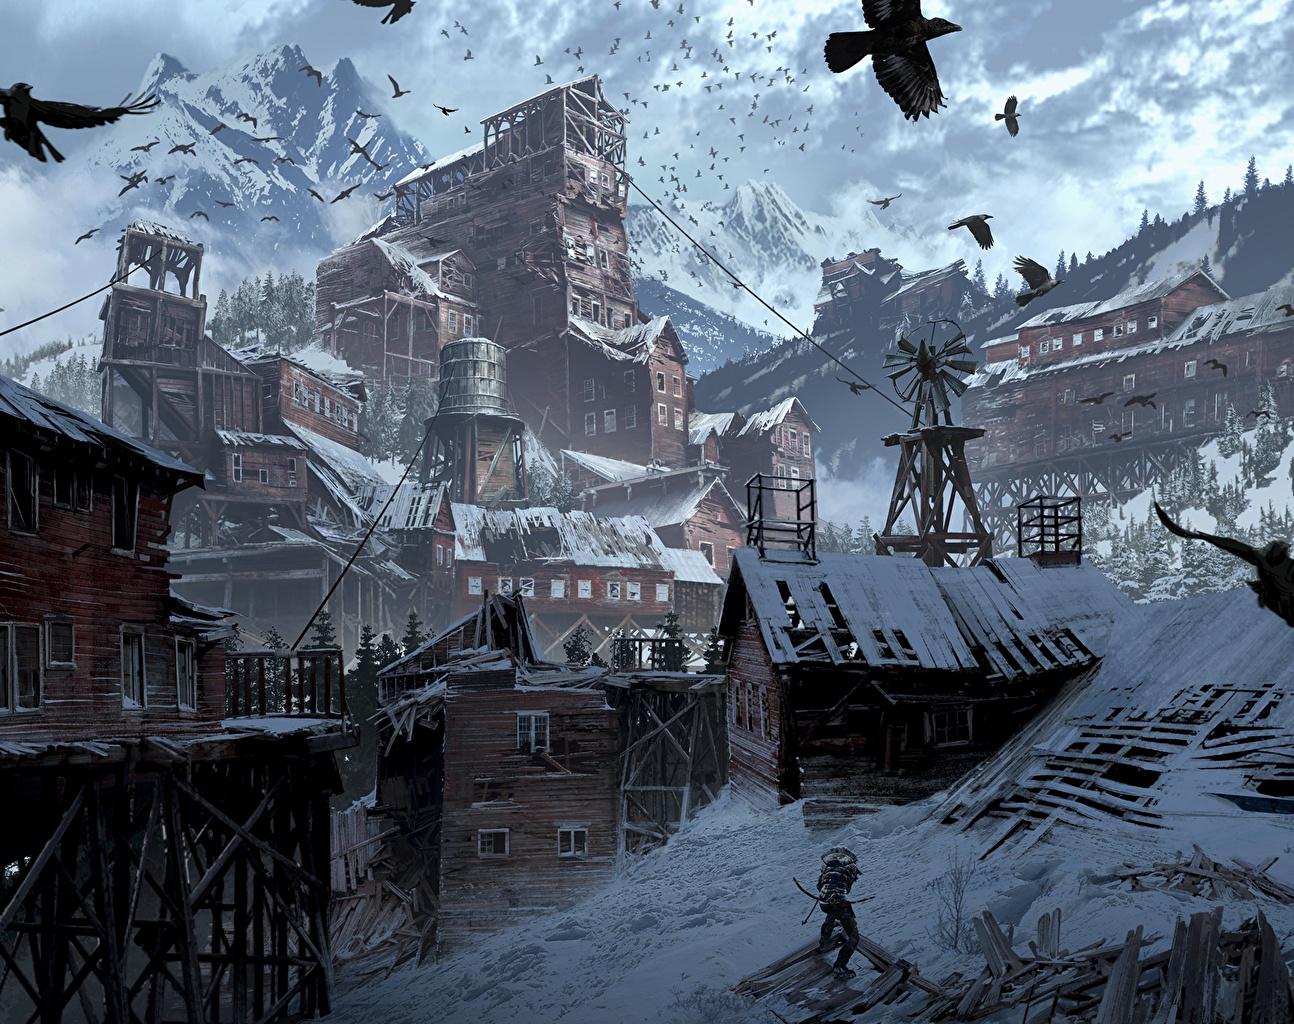 Image Rise of the Tomb Raider Lara Croft Village Winter mountain